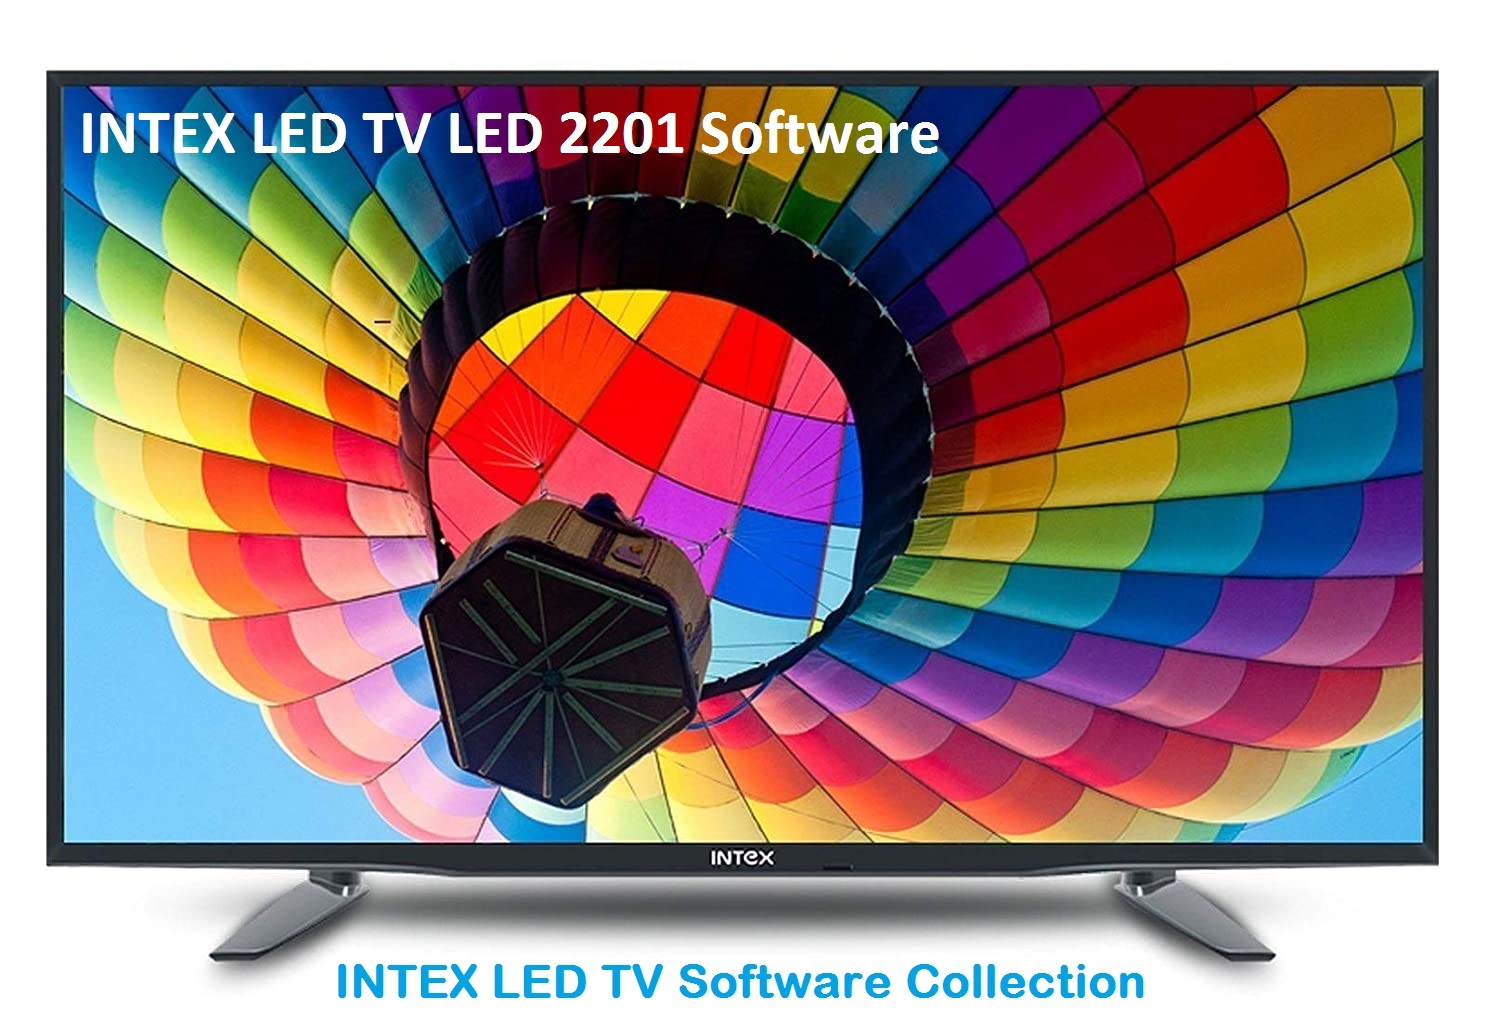 Intex Led-3219